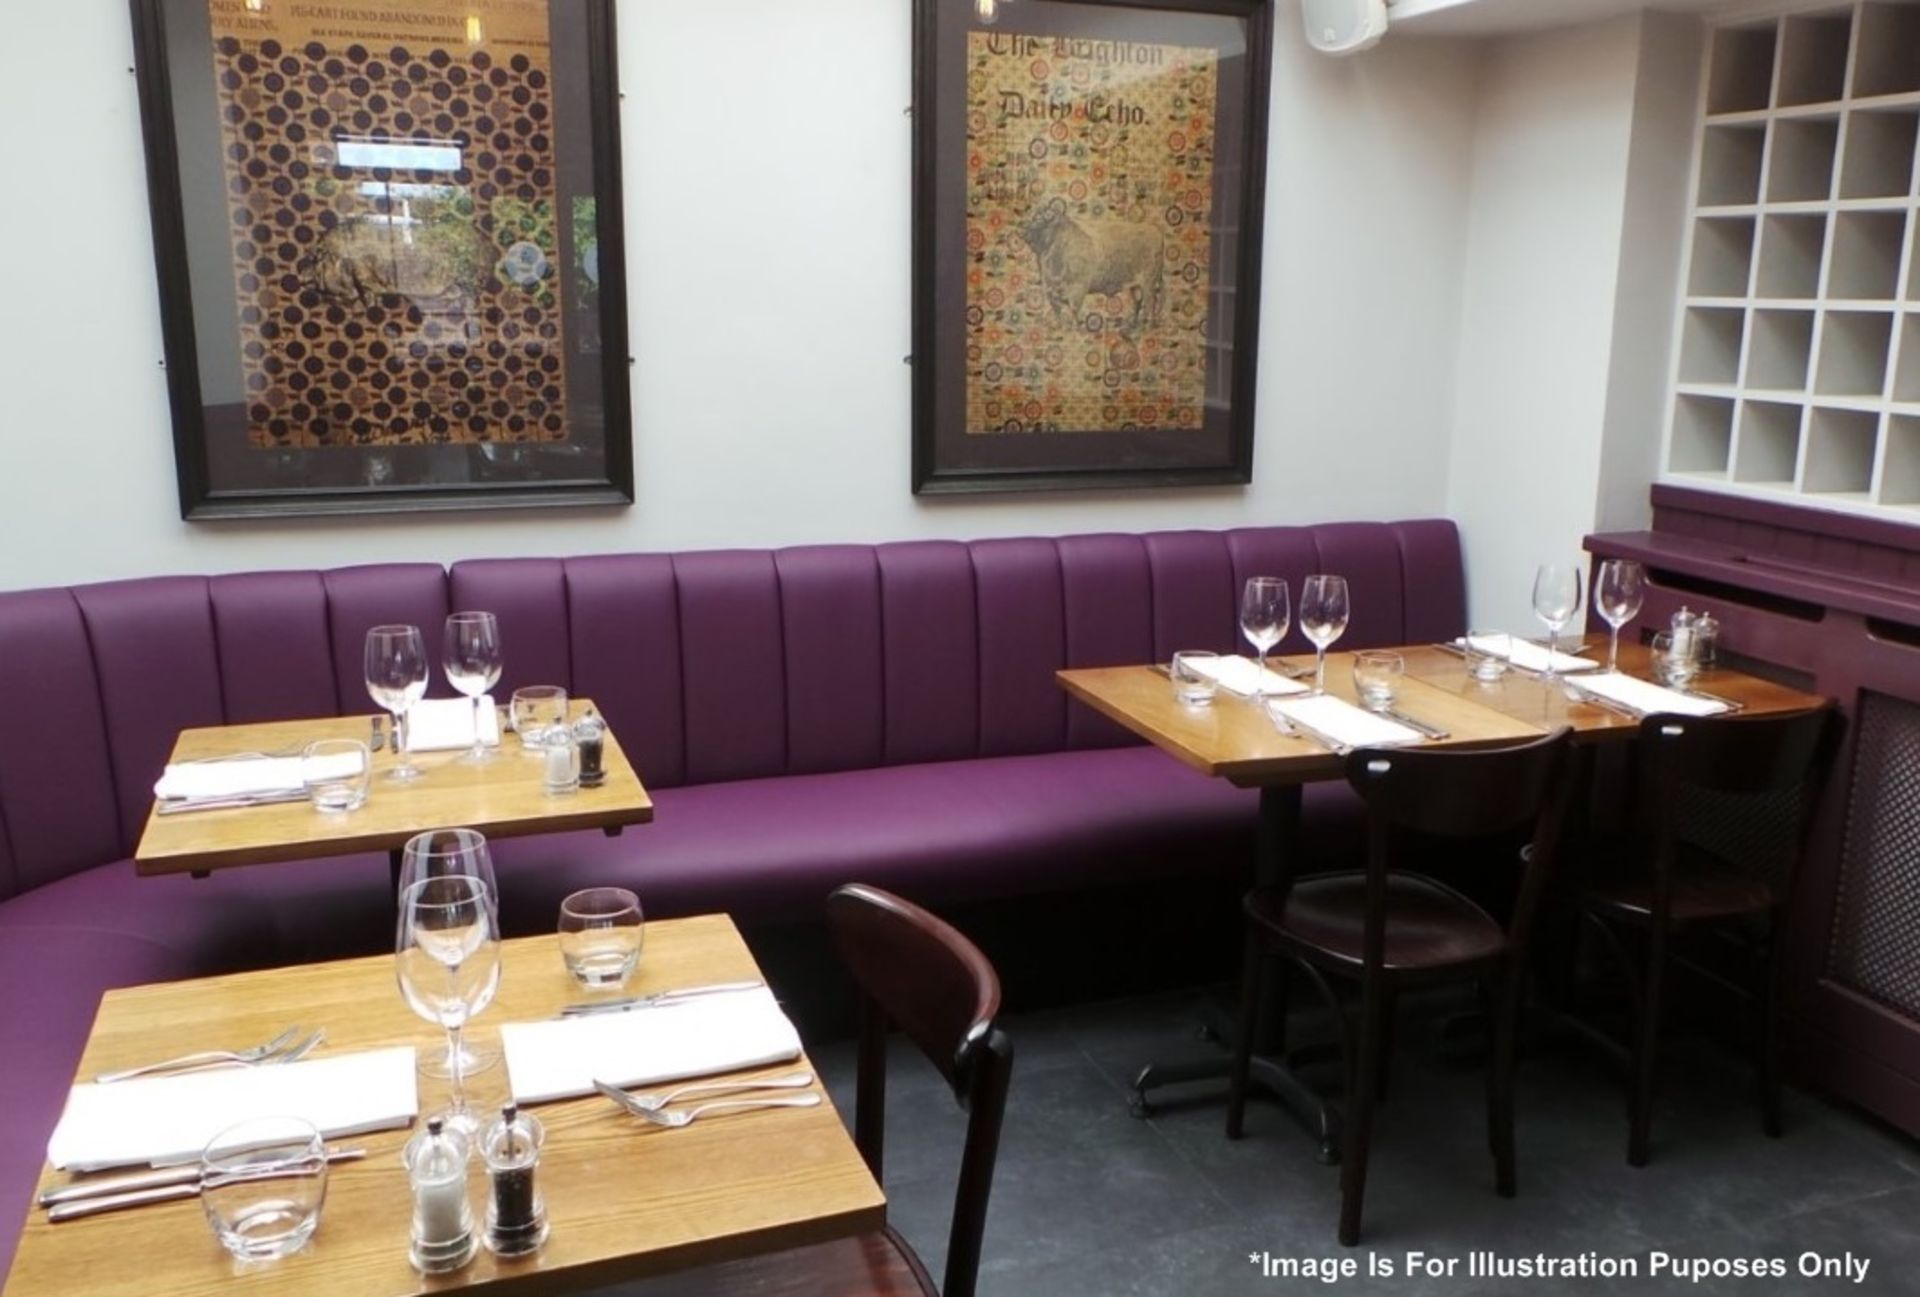 5 x Square Bistro Tables - Dimensions: 65.5cm x 65.5cm - Gourmet Restaurant Closure - Buyer To - Image 2 of 3